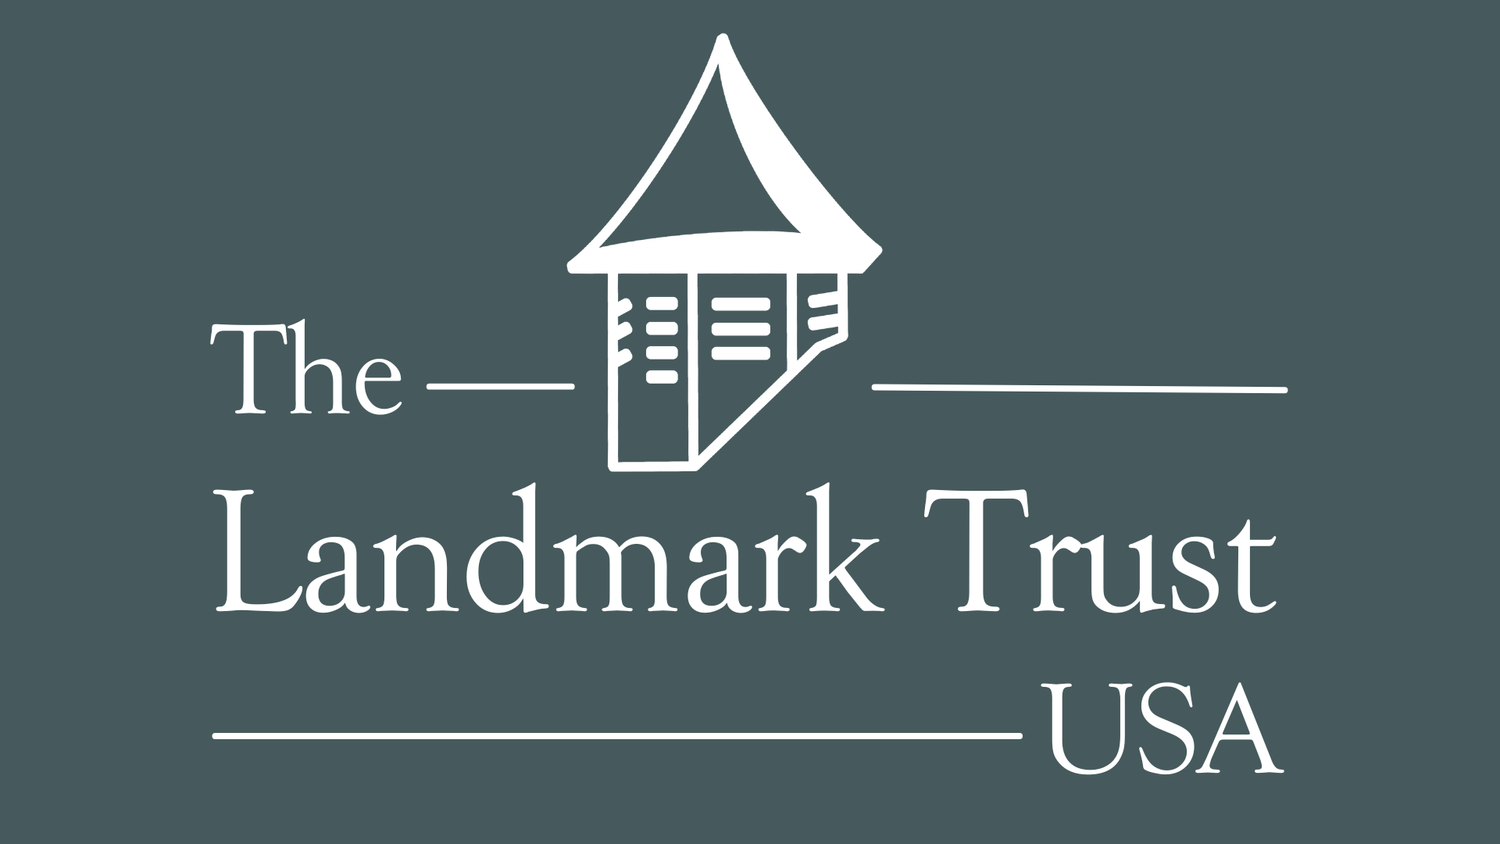 The Landmark Trust USA